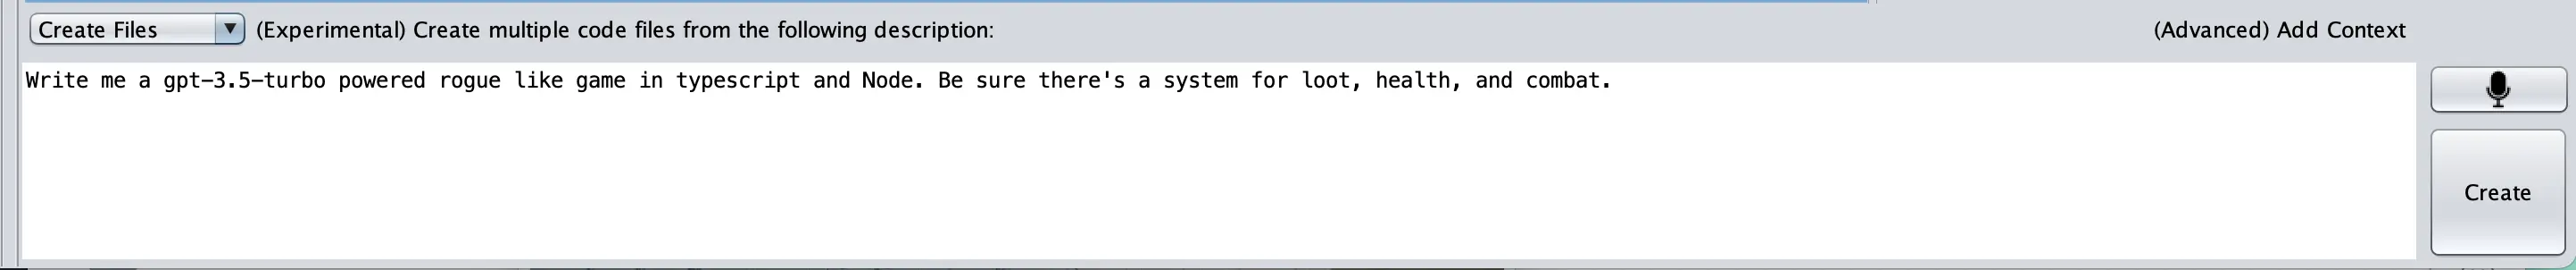 A screenshot of the input prompt